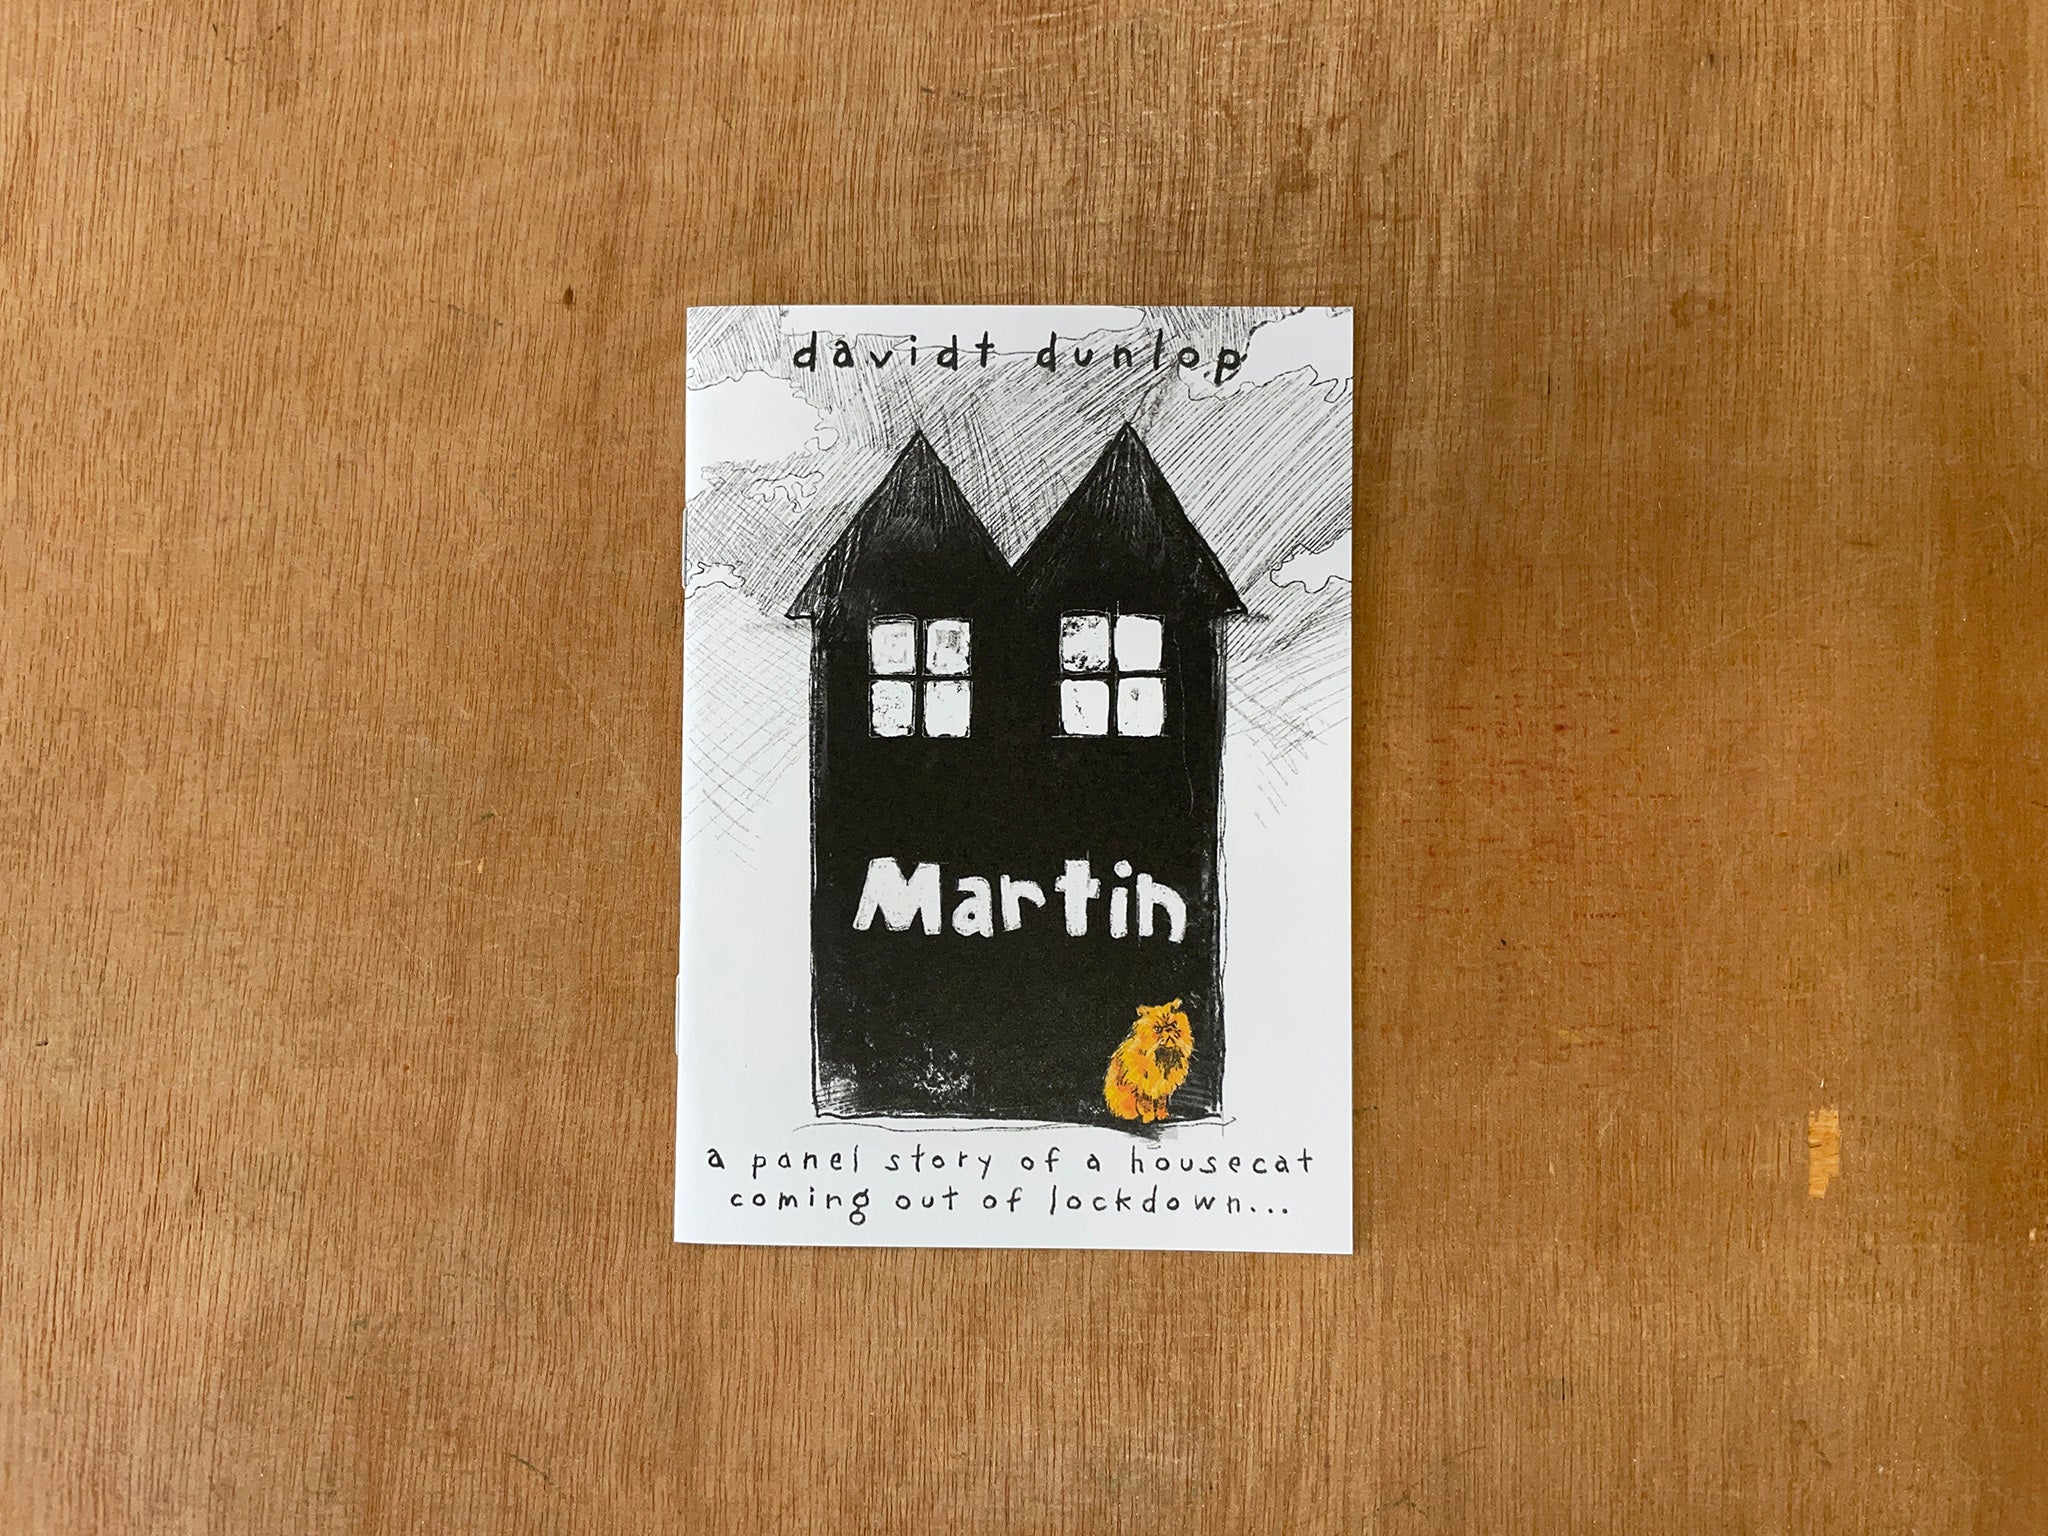 MARTIN by Davidt Dunlop